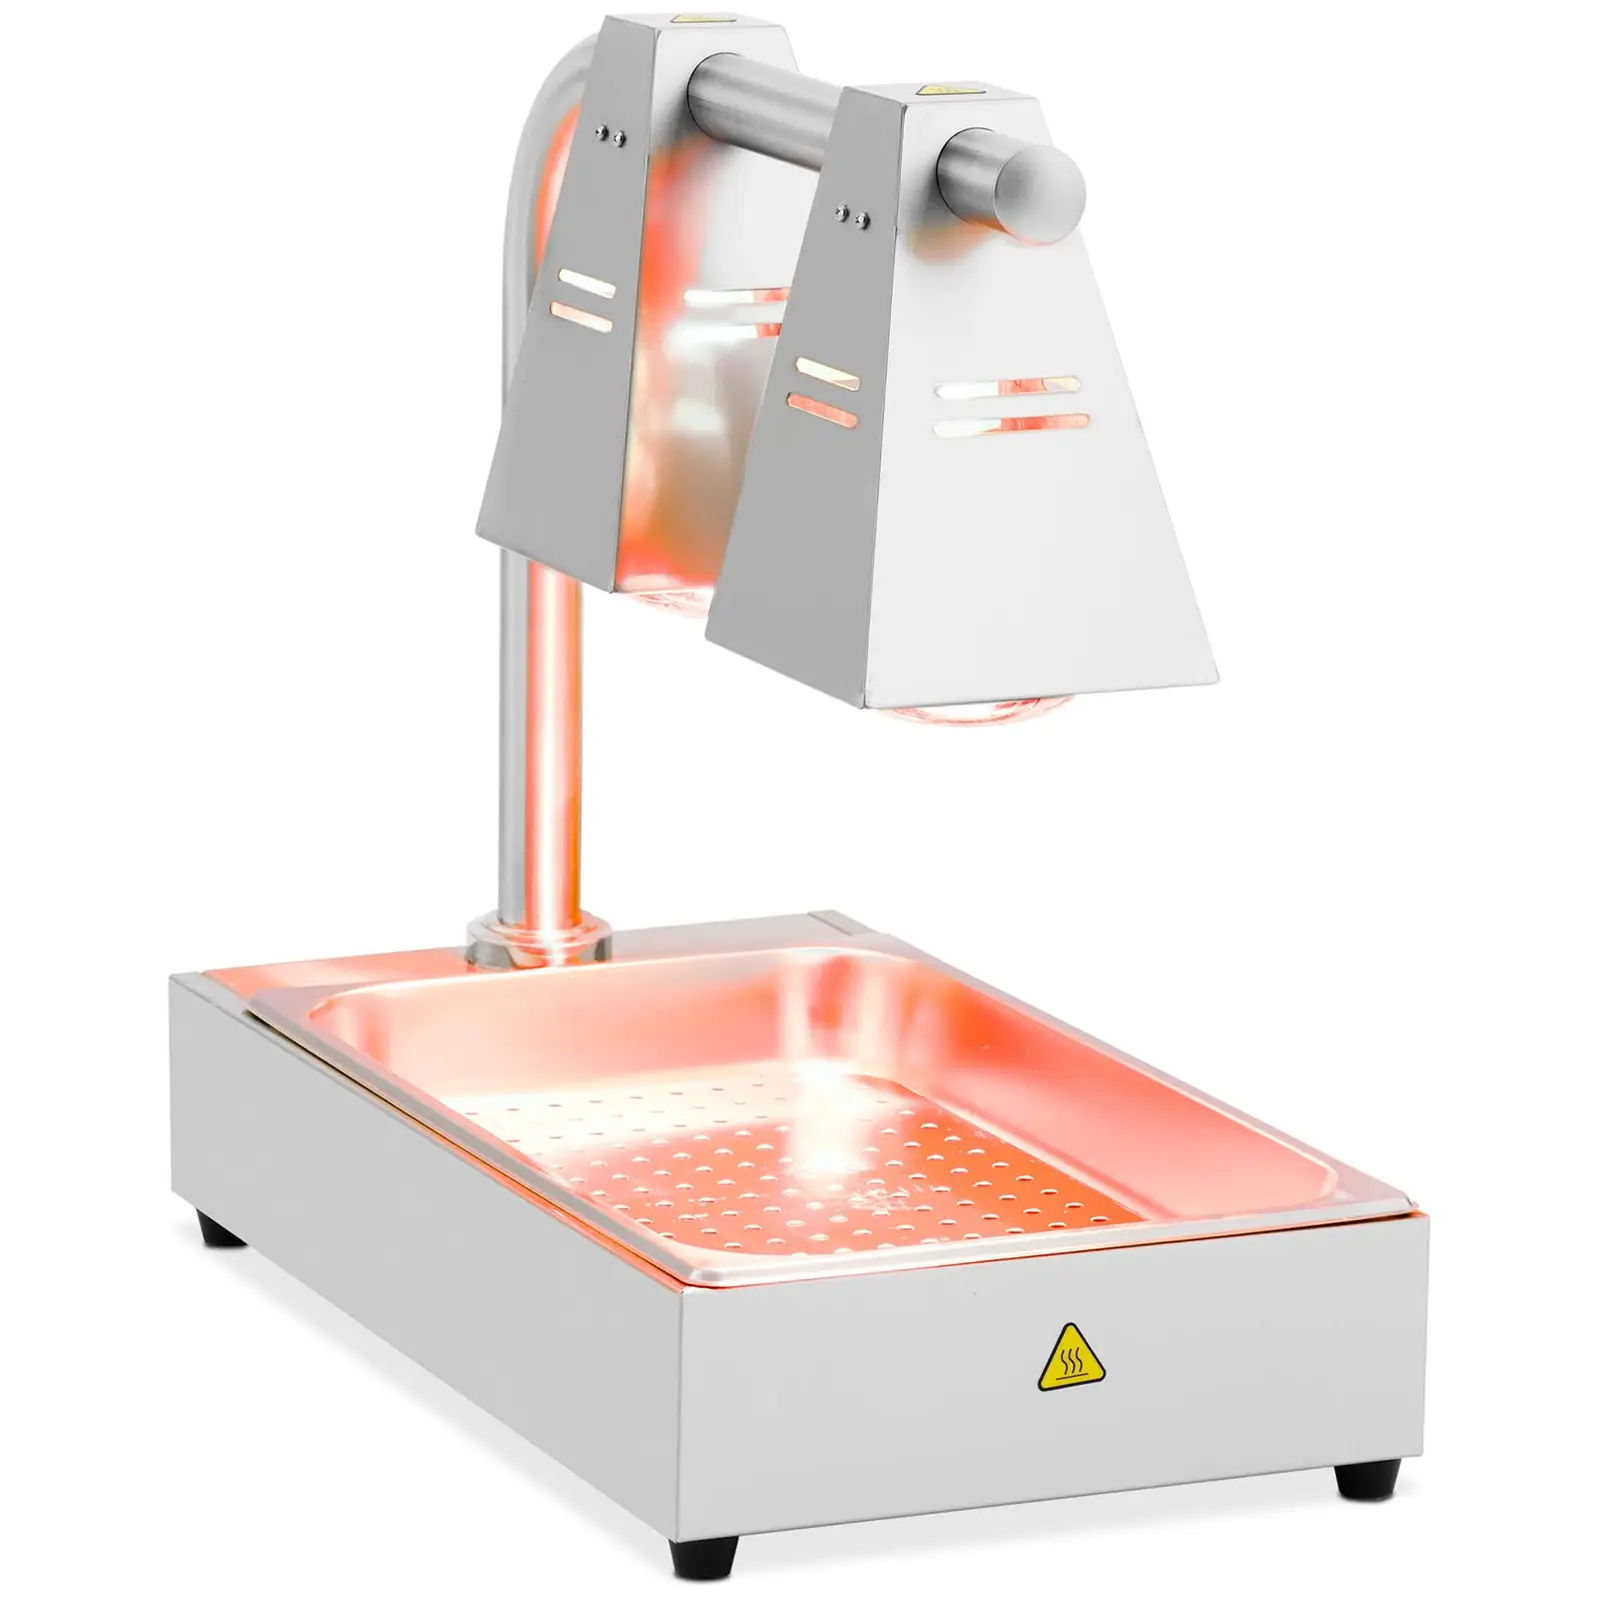 Lampada riscaldante per alimenti a raggi infrarossi - 600 W - GN 1/1 - 2 lampade riscaldanti - Royal Catering